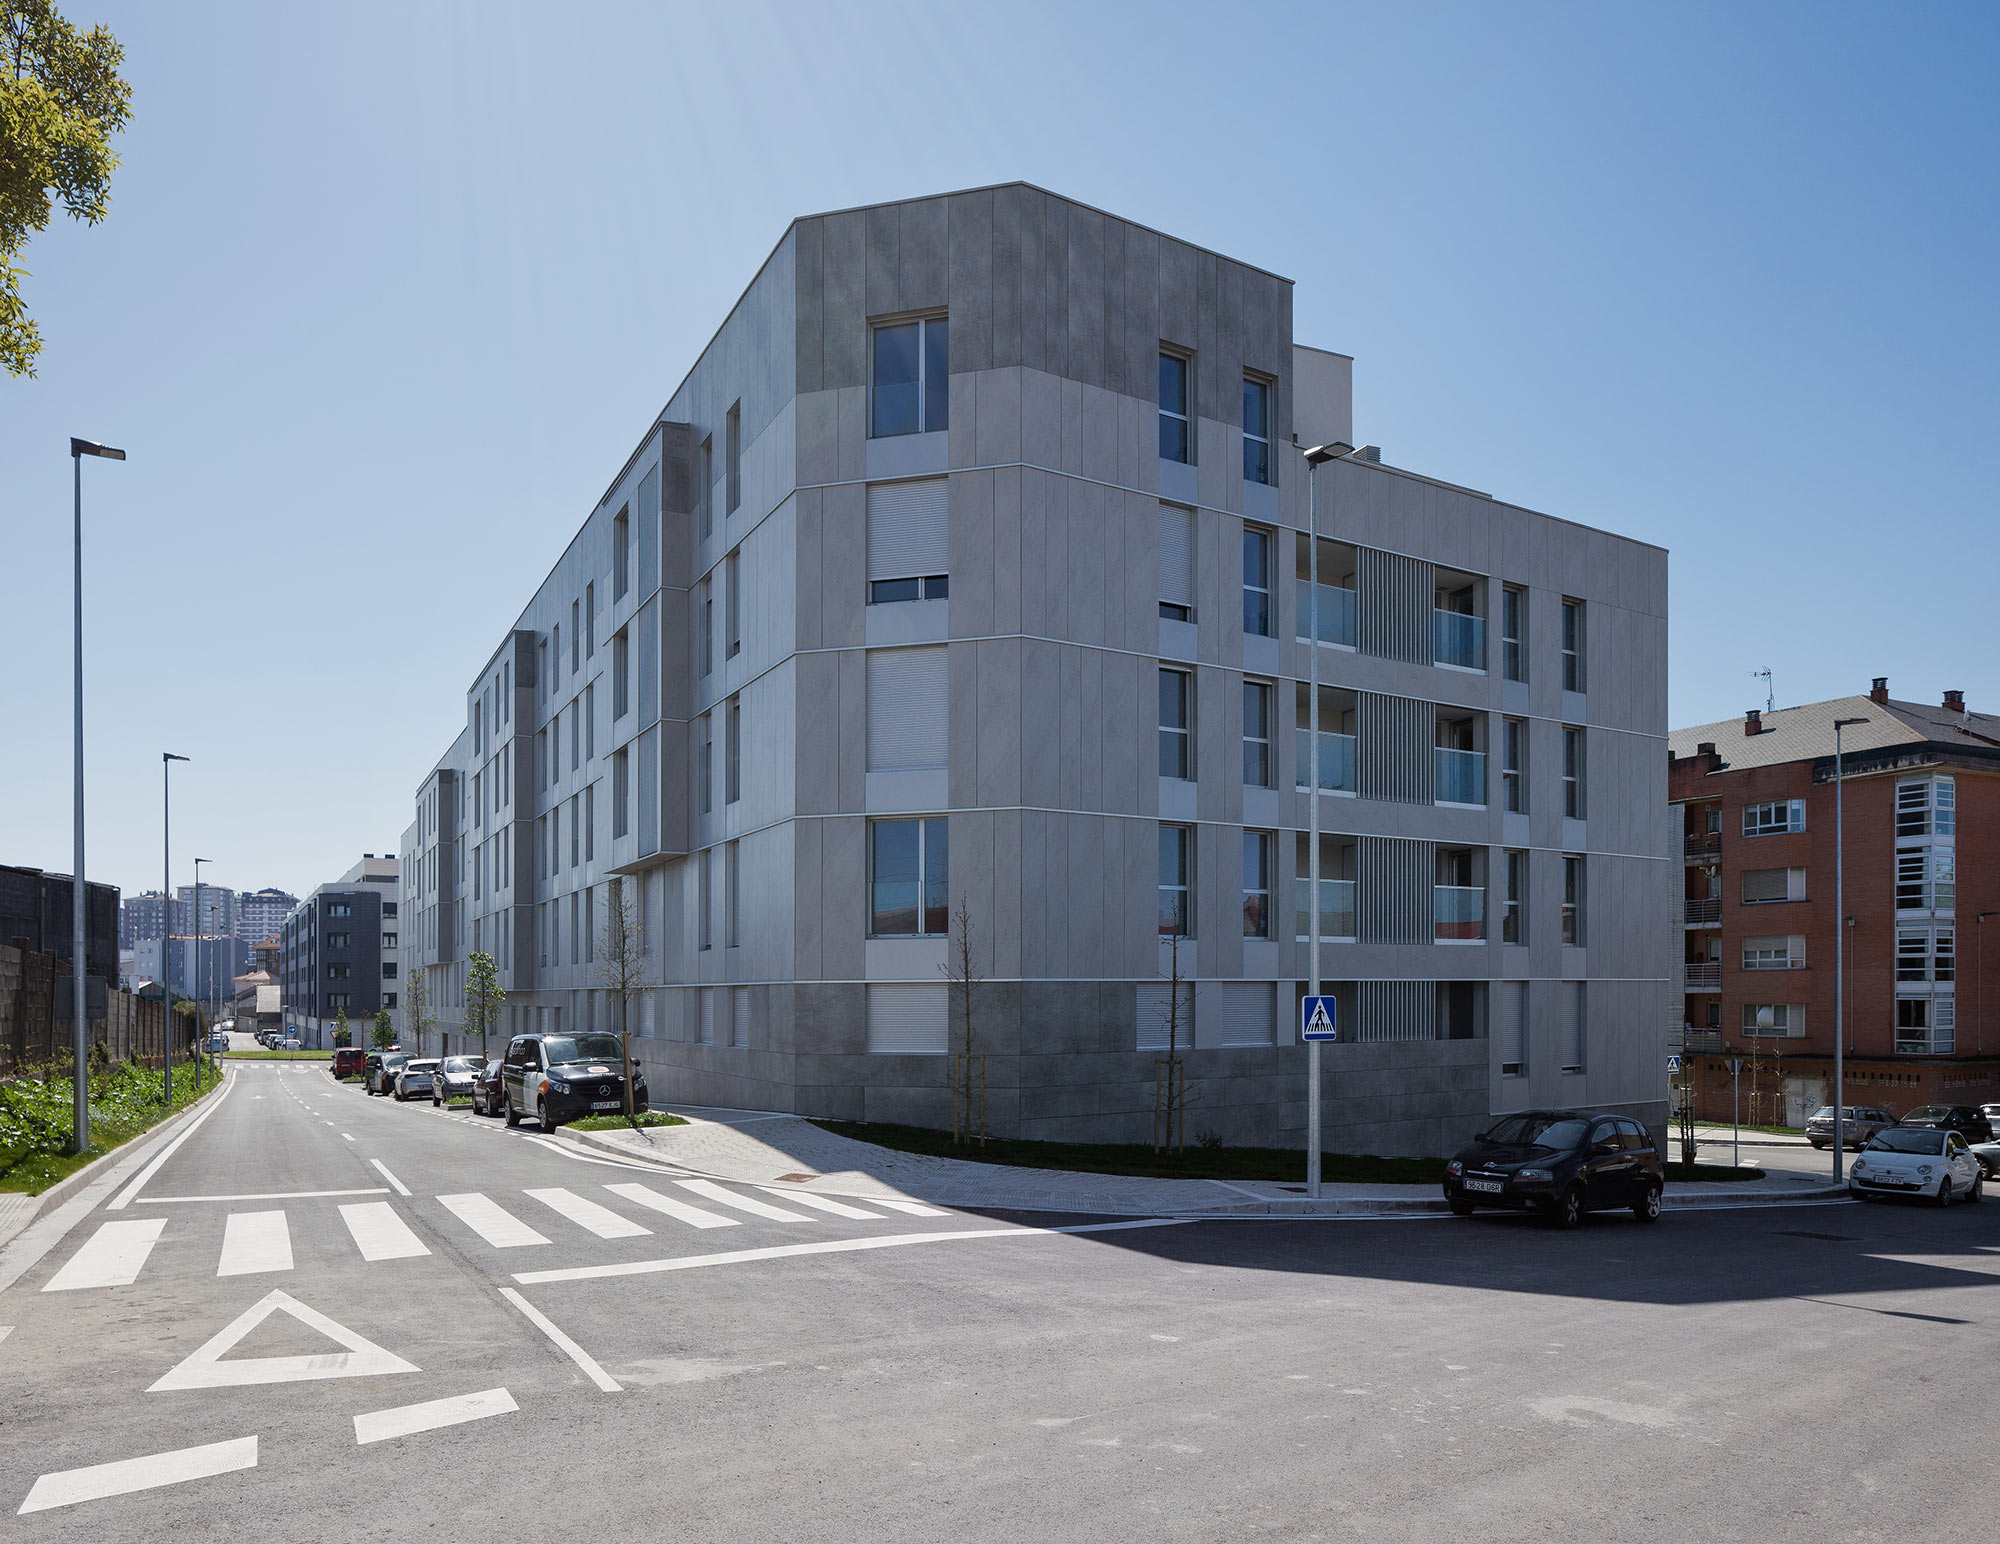 Image of fachada albericia santander dekton 20 in Compact style for a subsidised housing building  - Cosentino